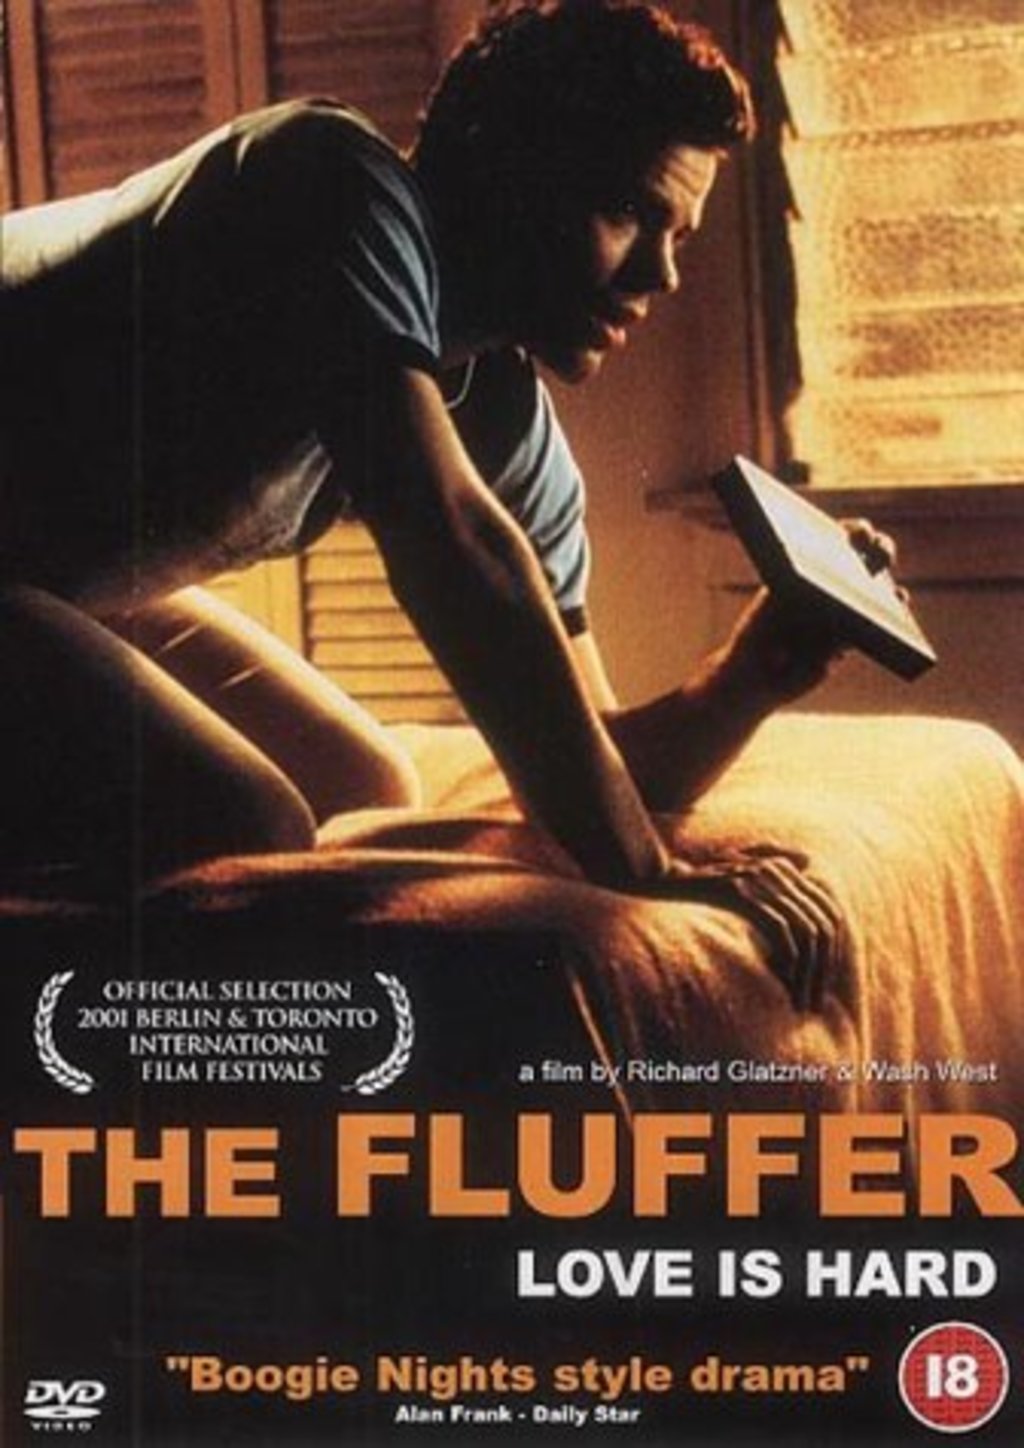 Watch The Fluffer On Netflix Today